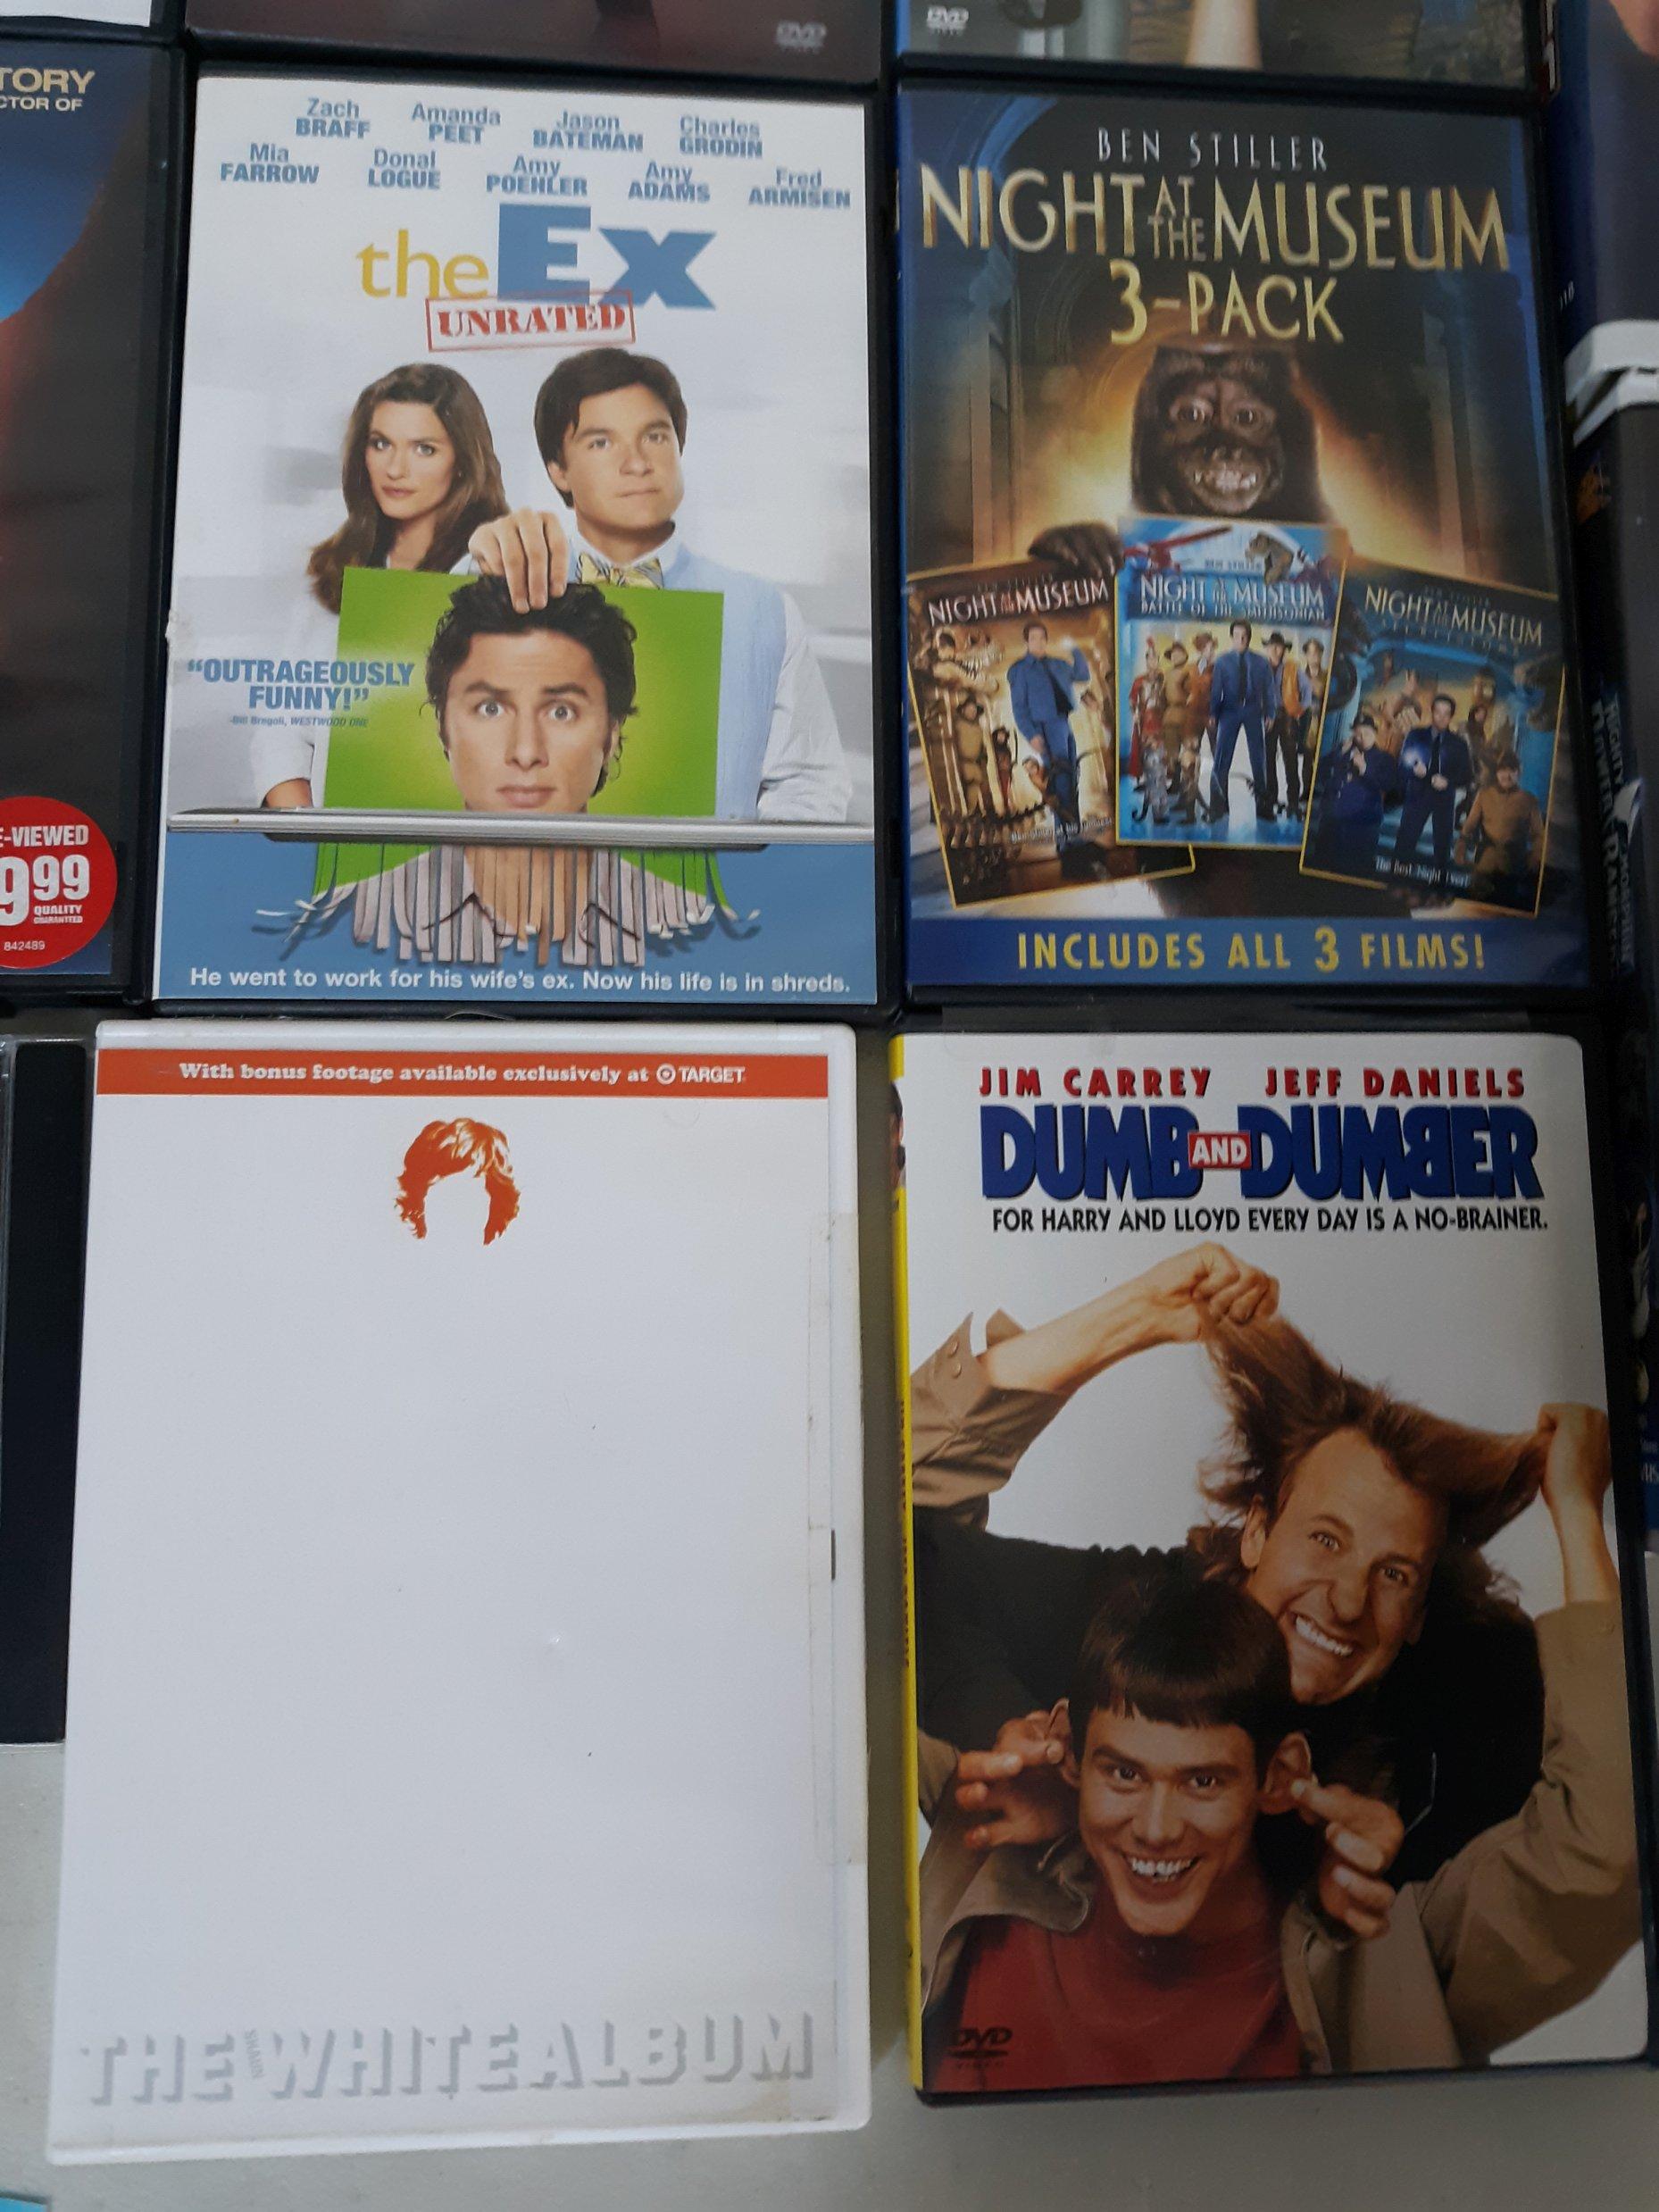 DVD/VCR Tape Lot